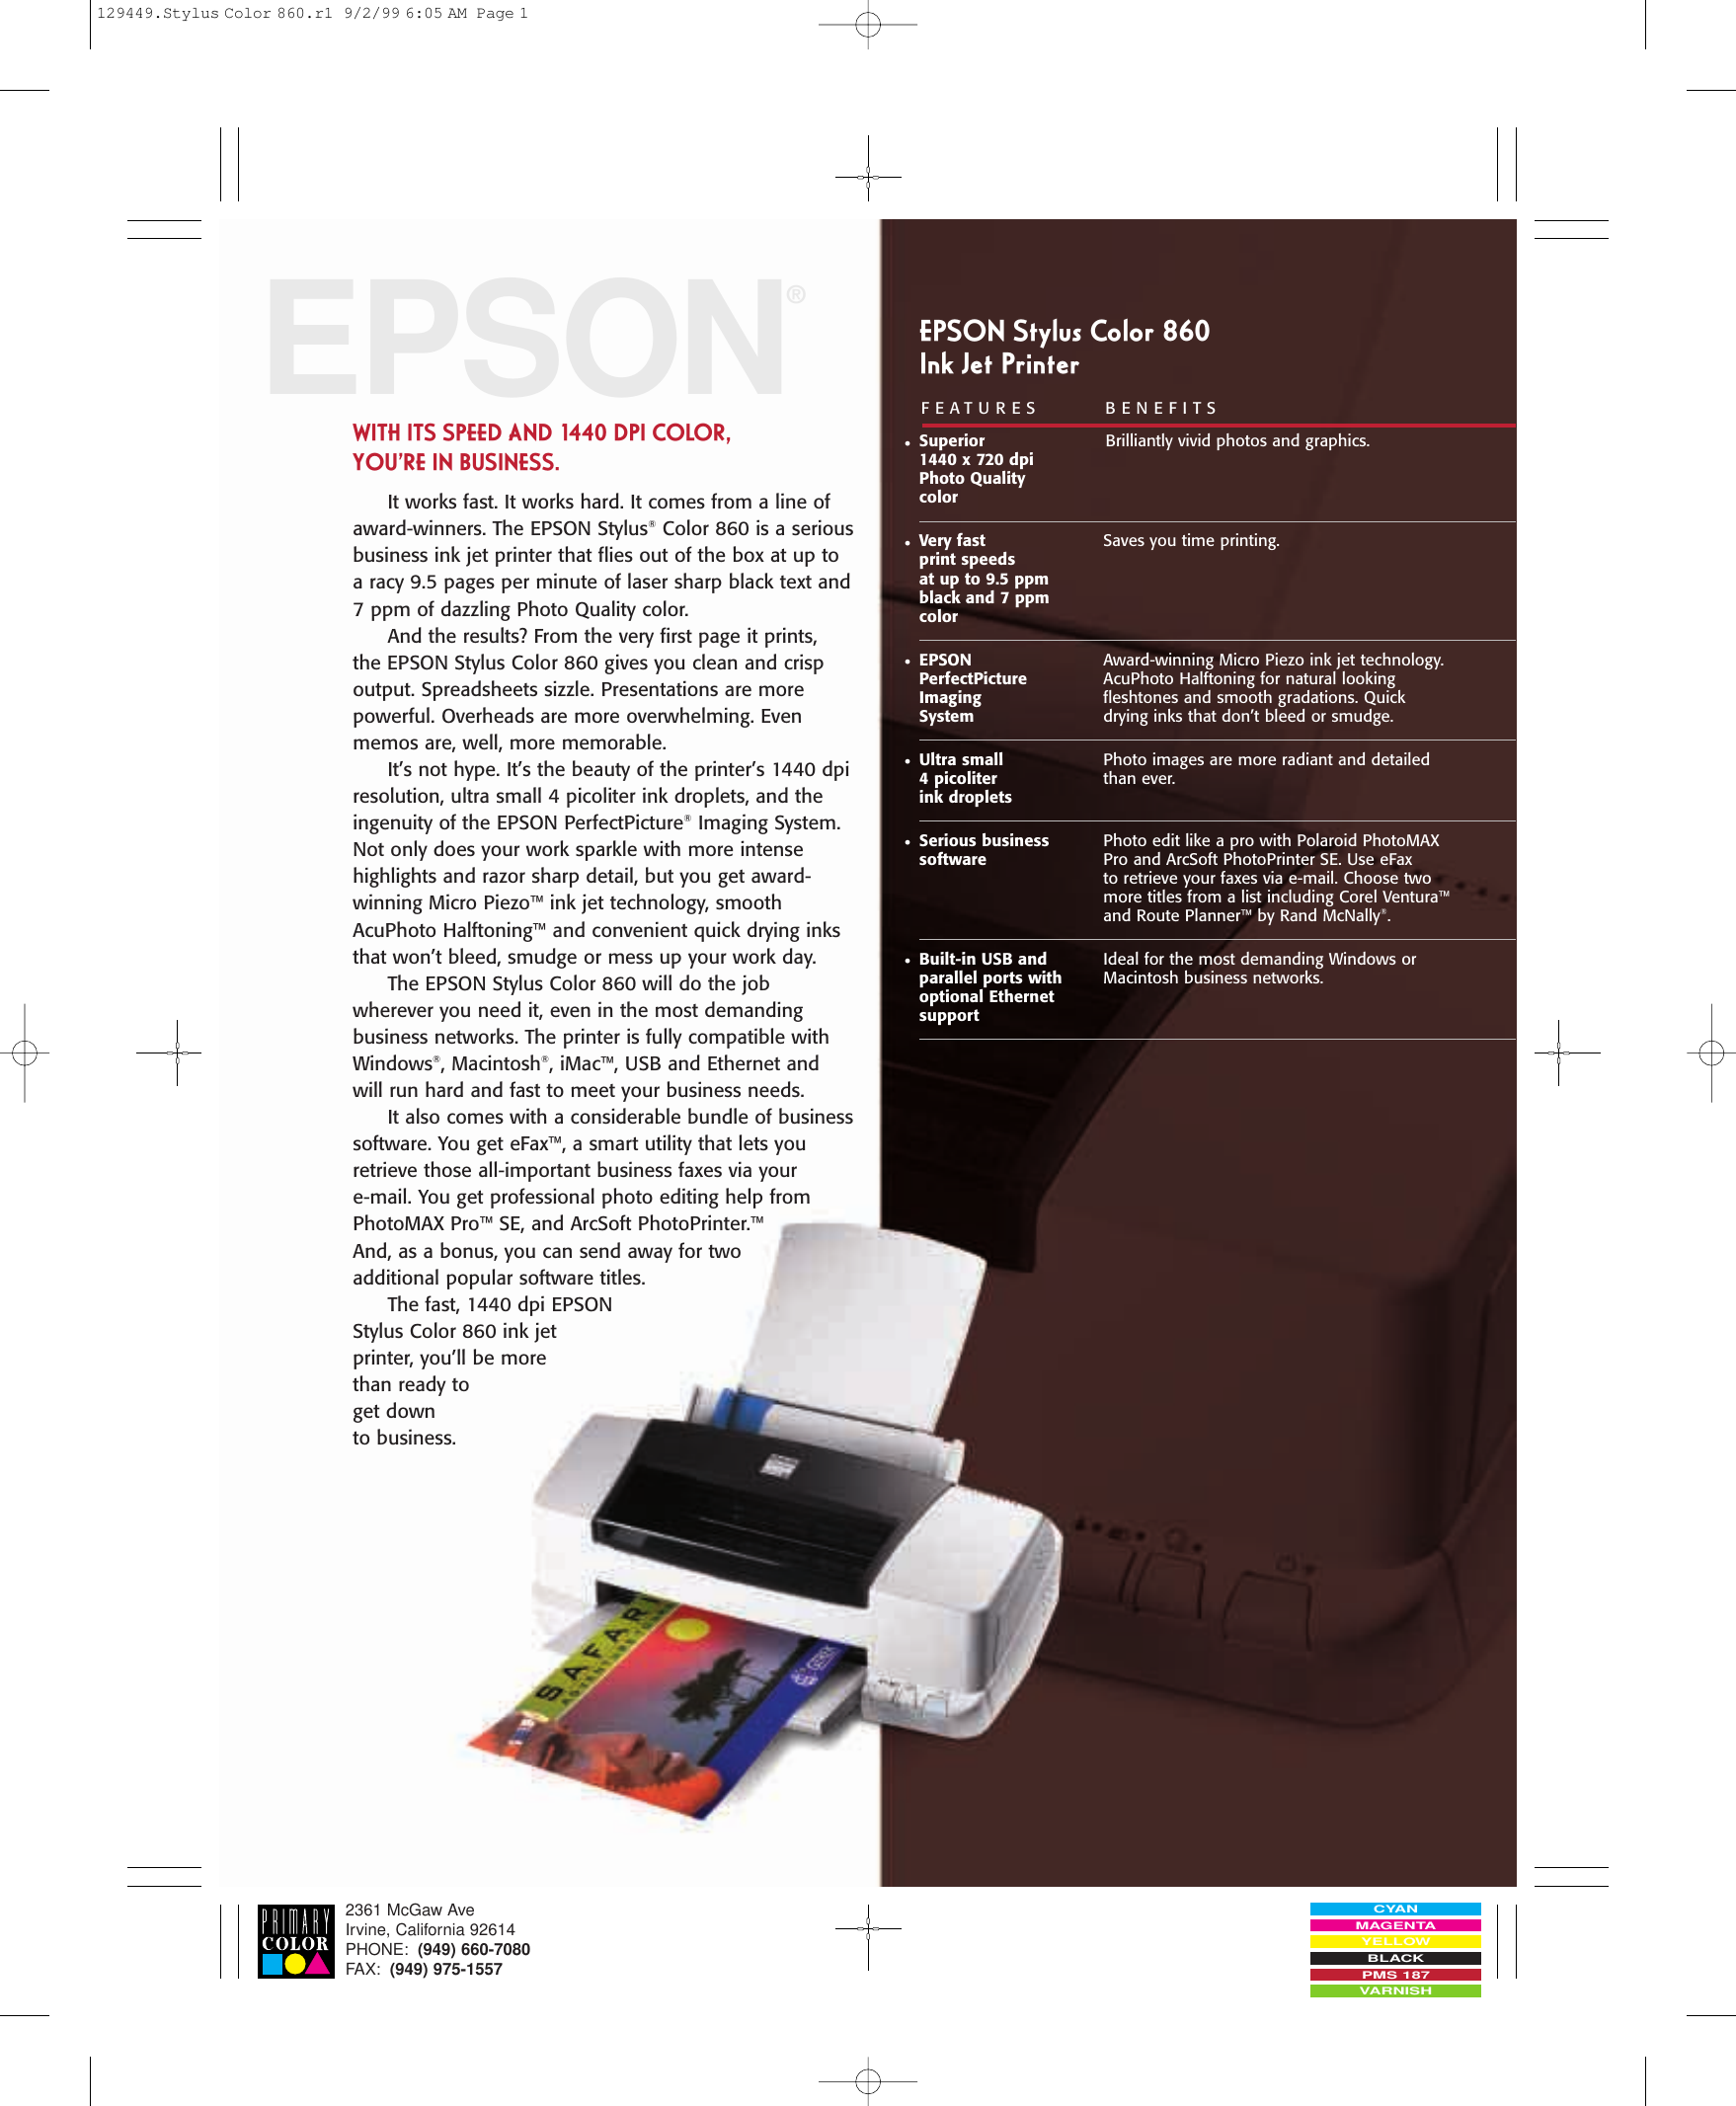 Epson Stylus Color 860 Ink Jet Printer Product Brochure 2956